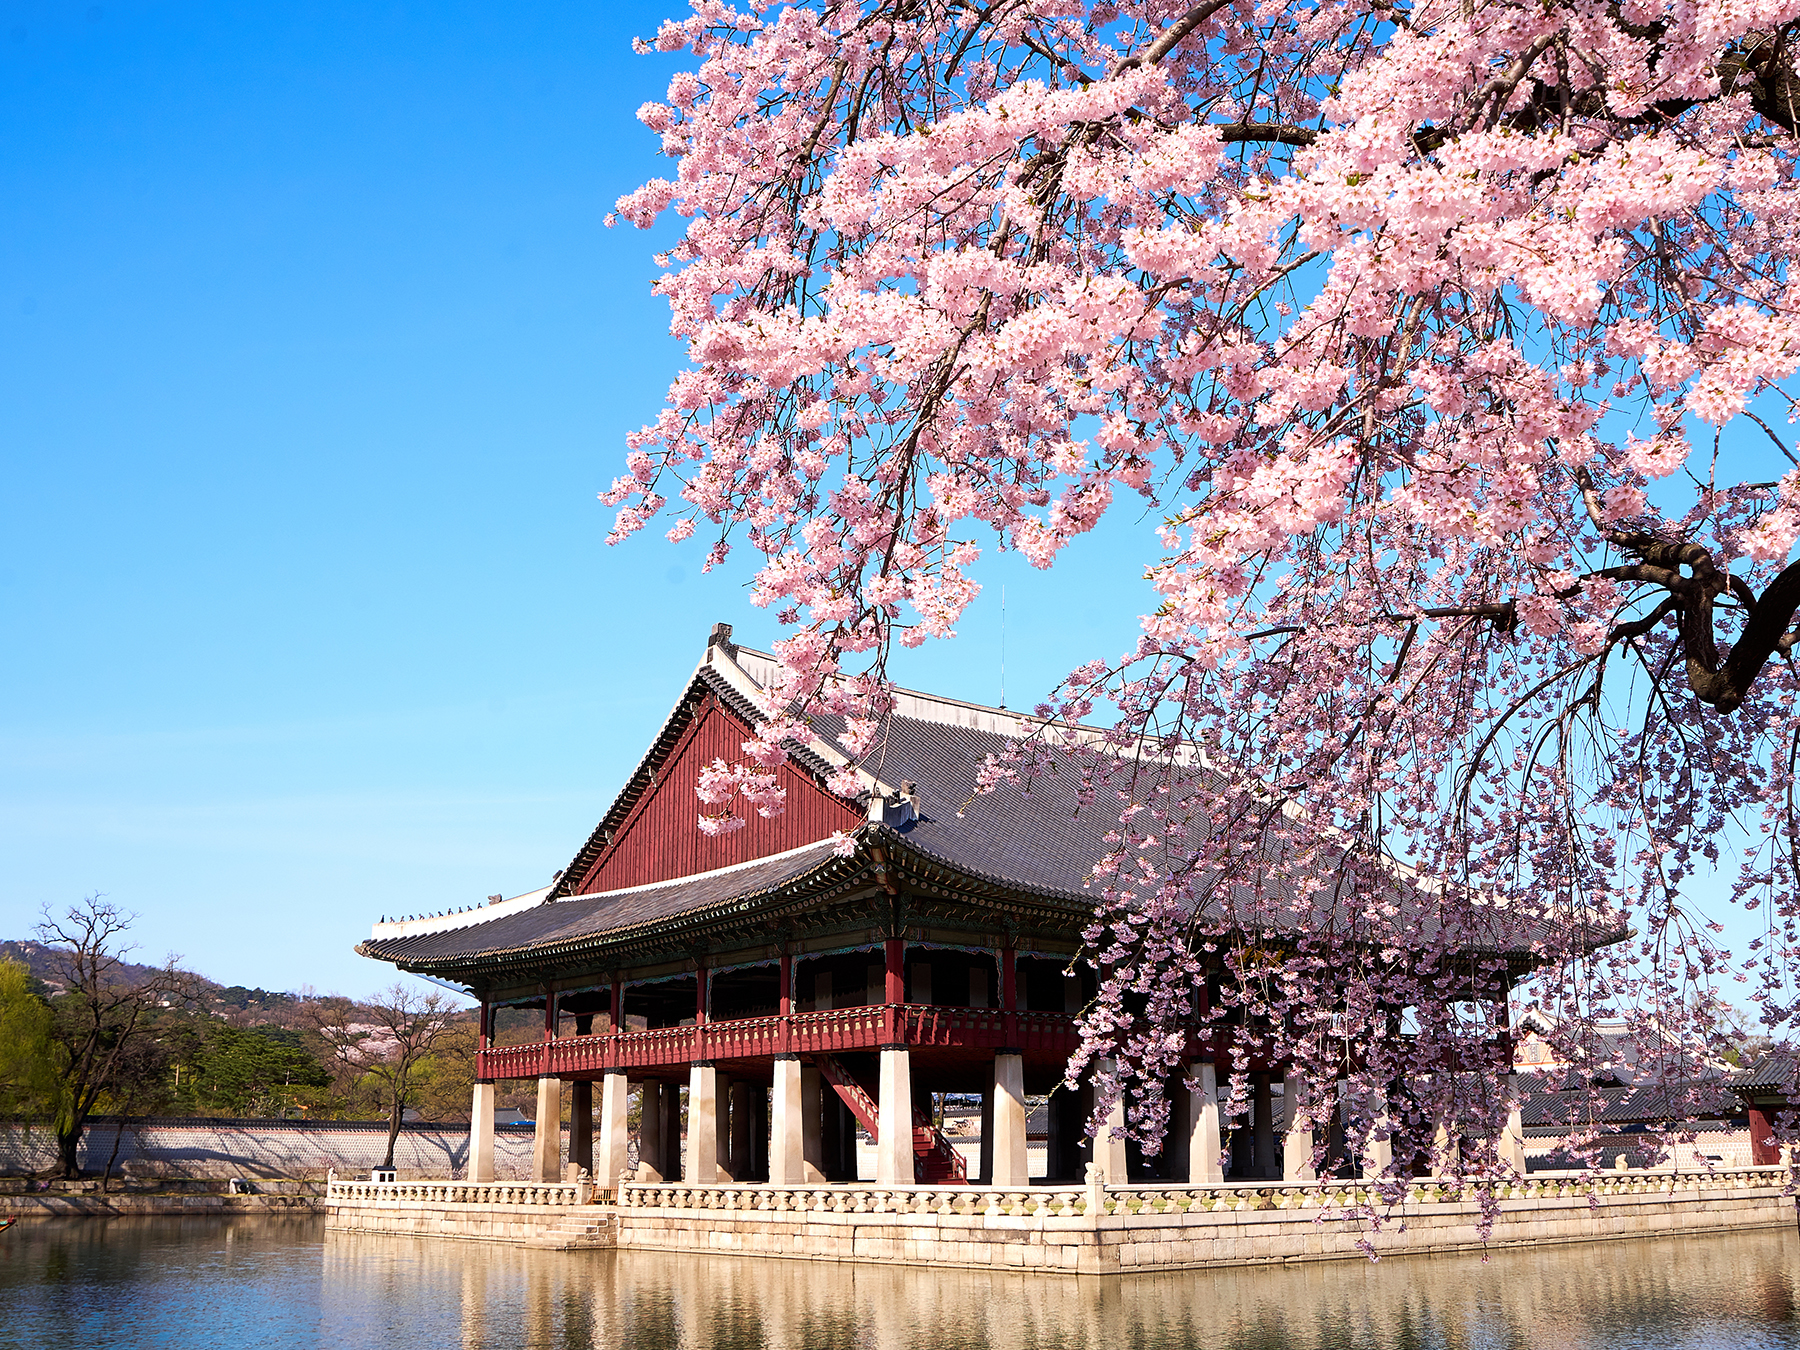 Tour du lịch Seoul của Sunvina Travel 2022/2023 154551